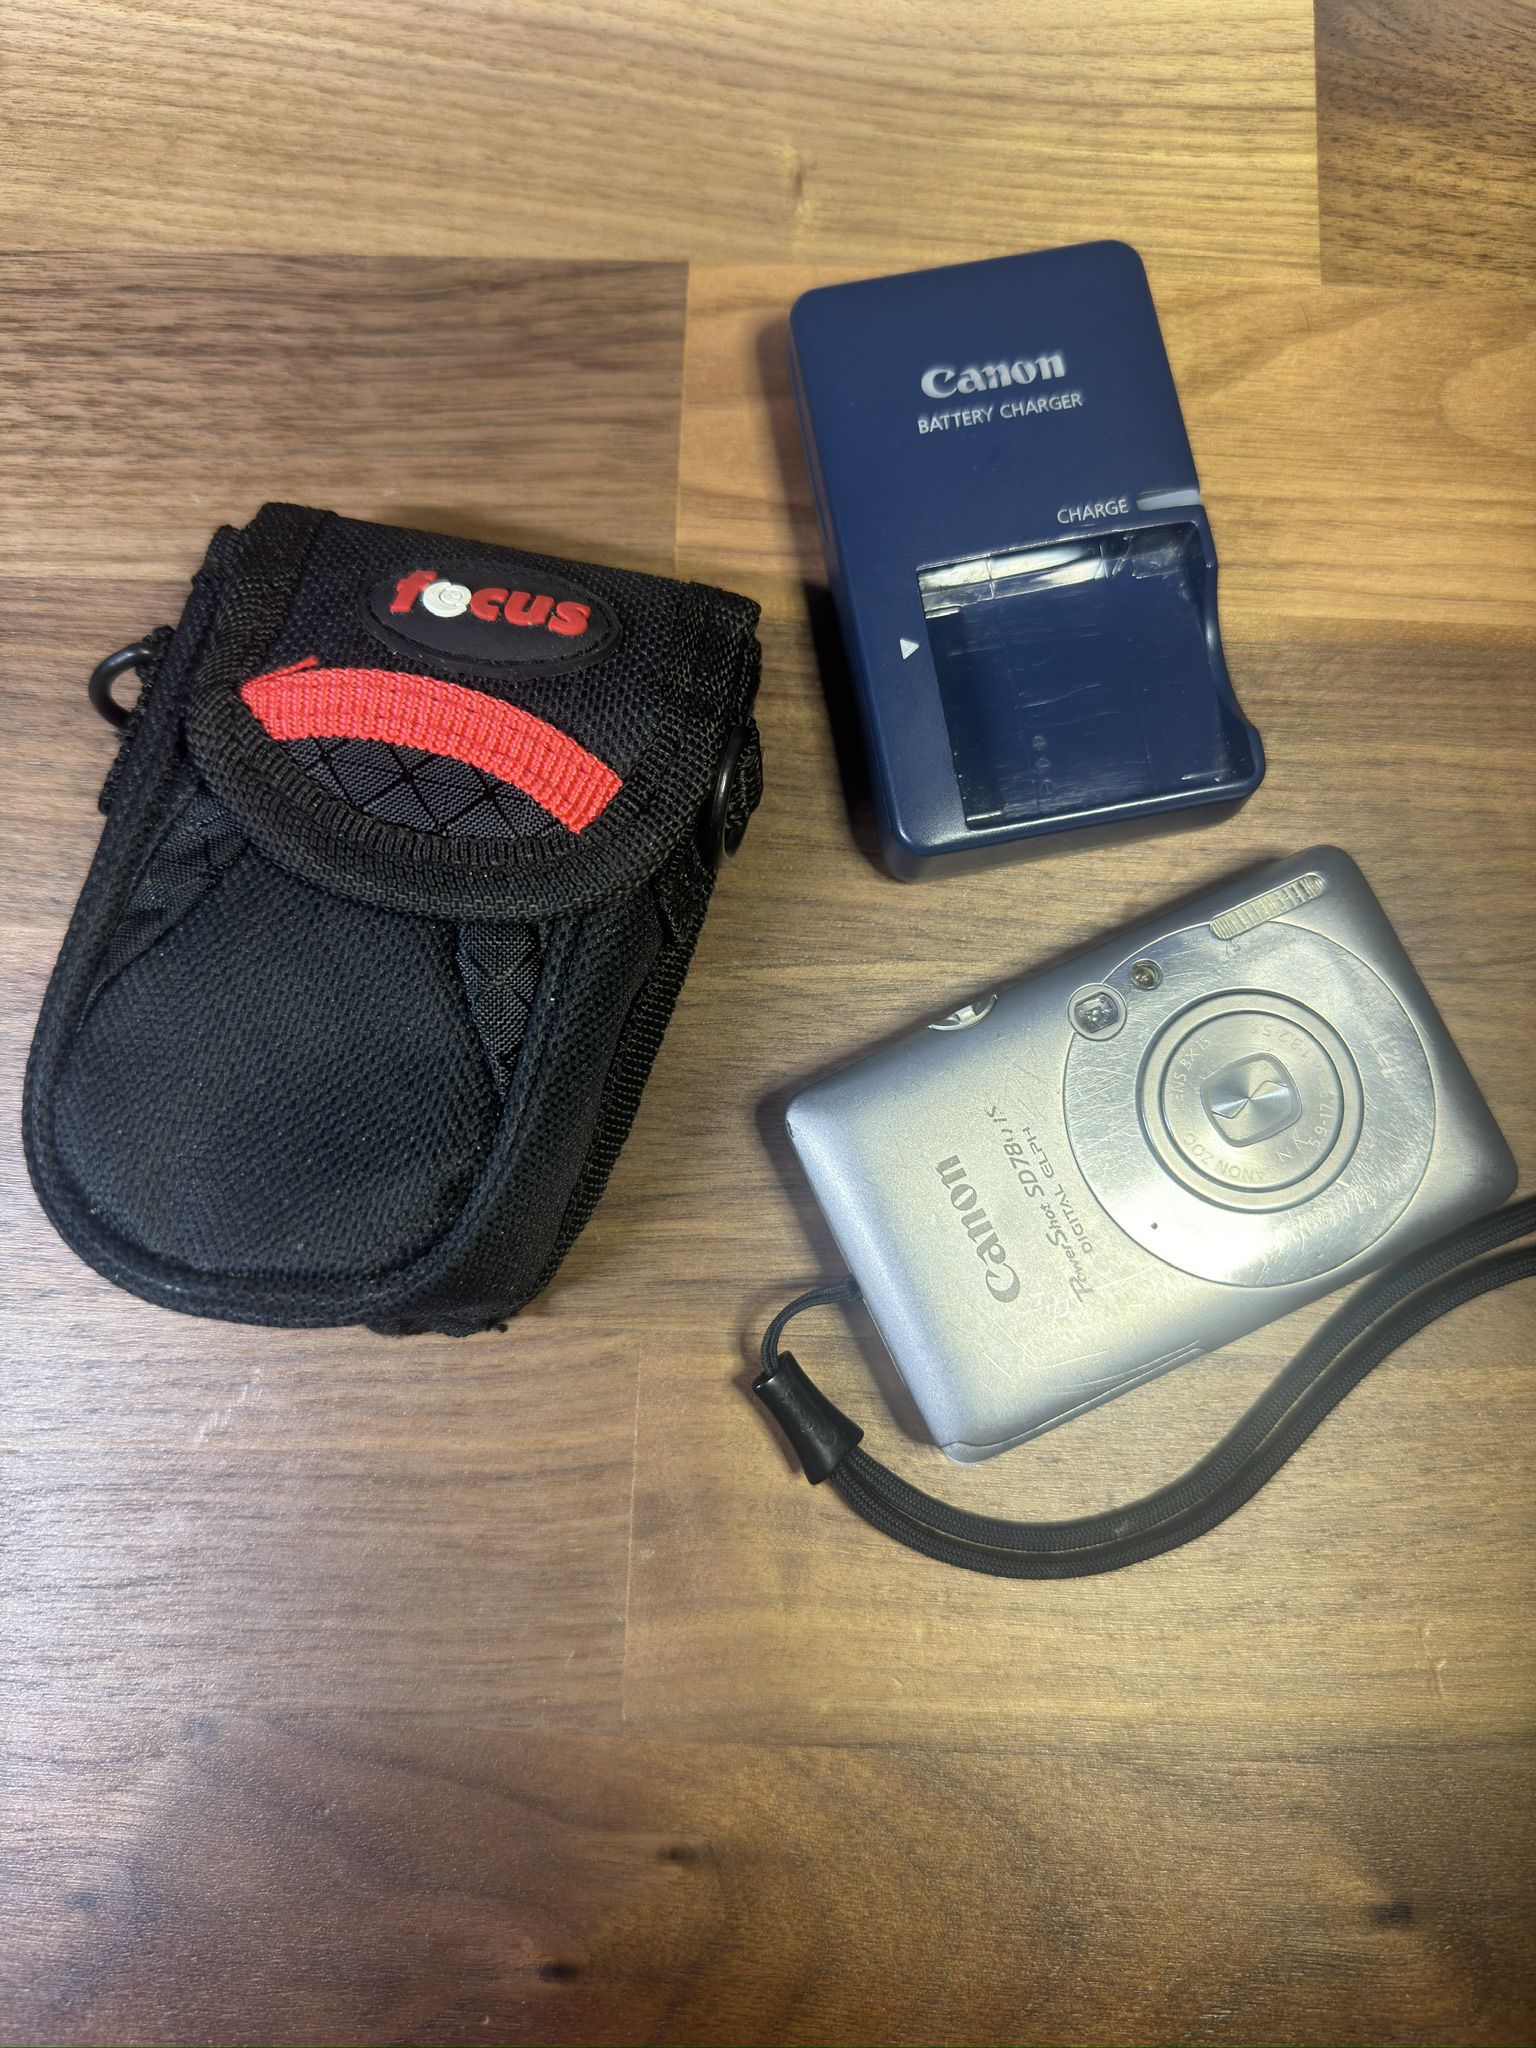 Canon PowerShot SD780 IS 12.1MP Digital ELPH Camera